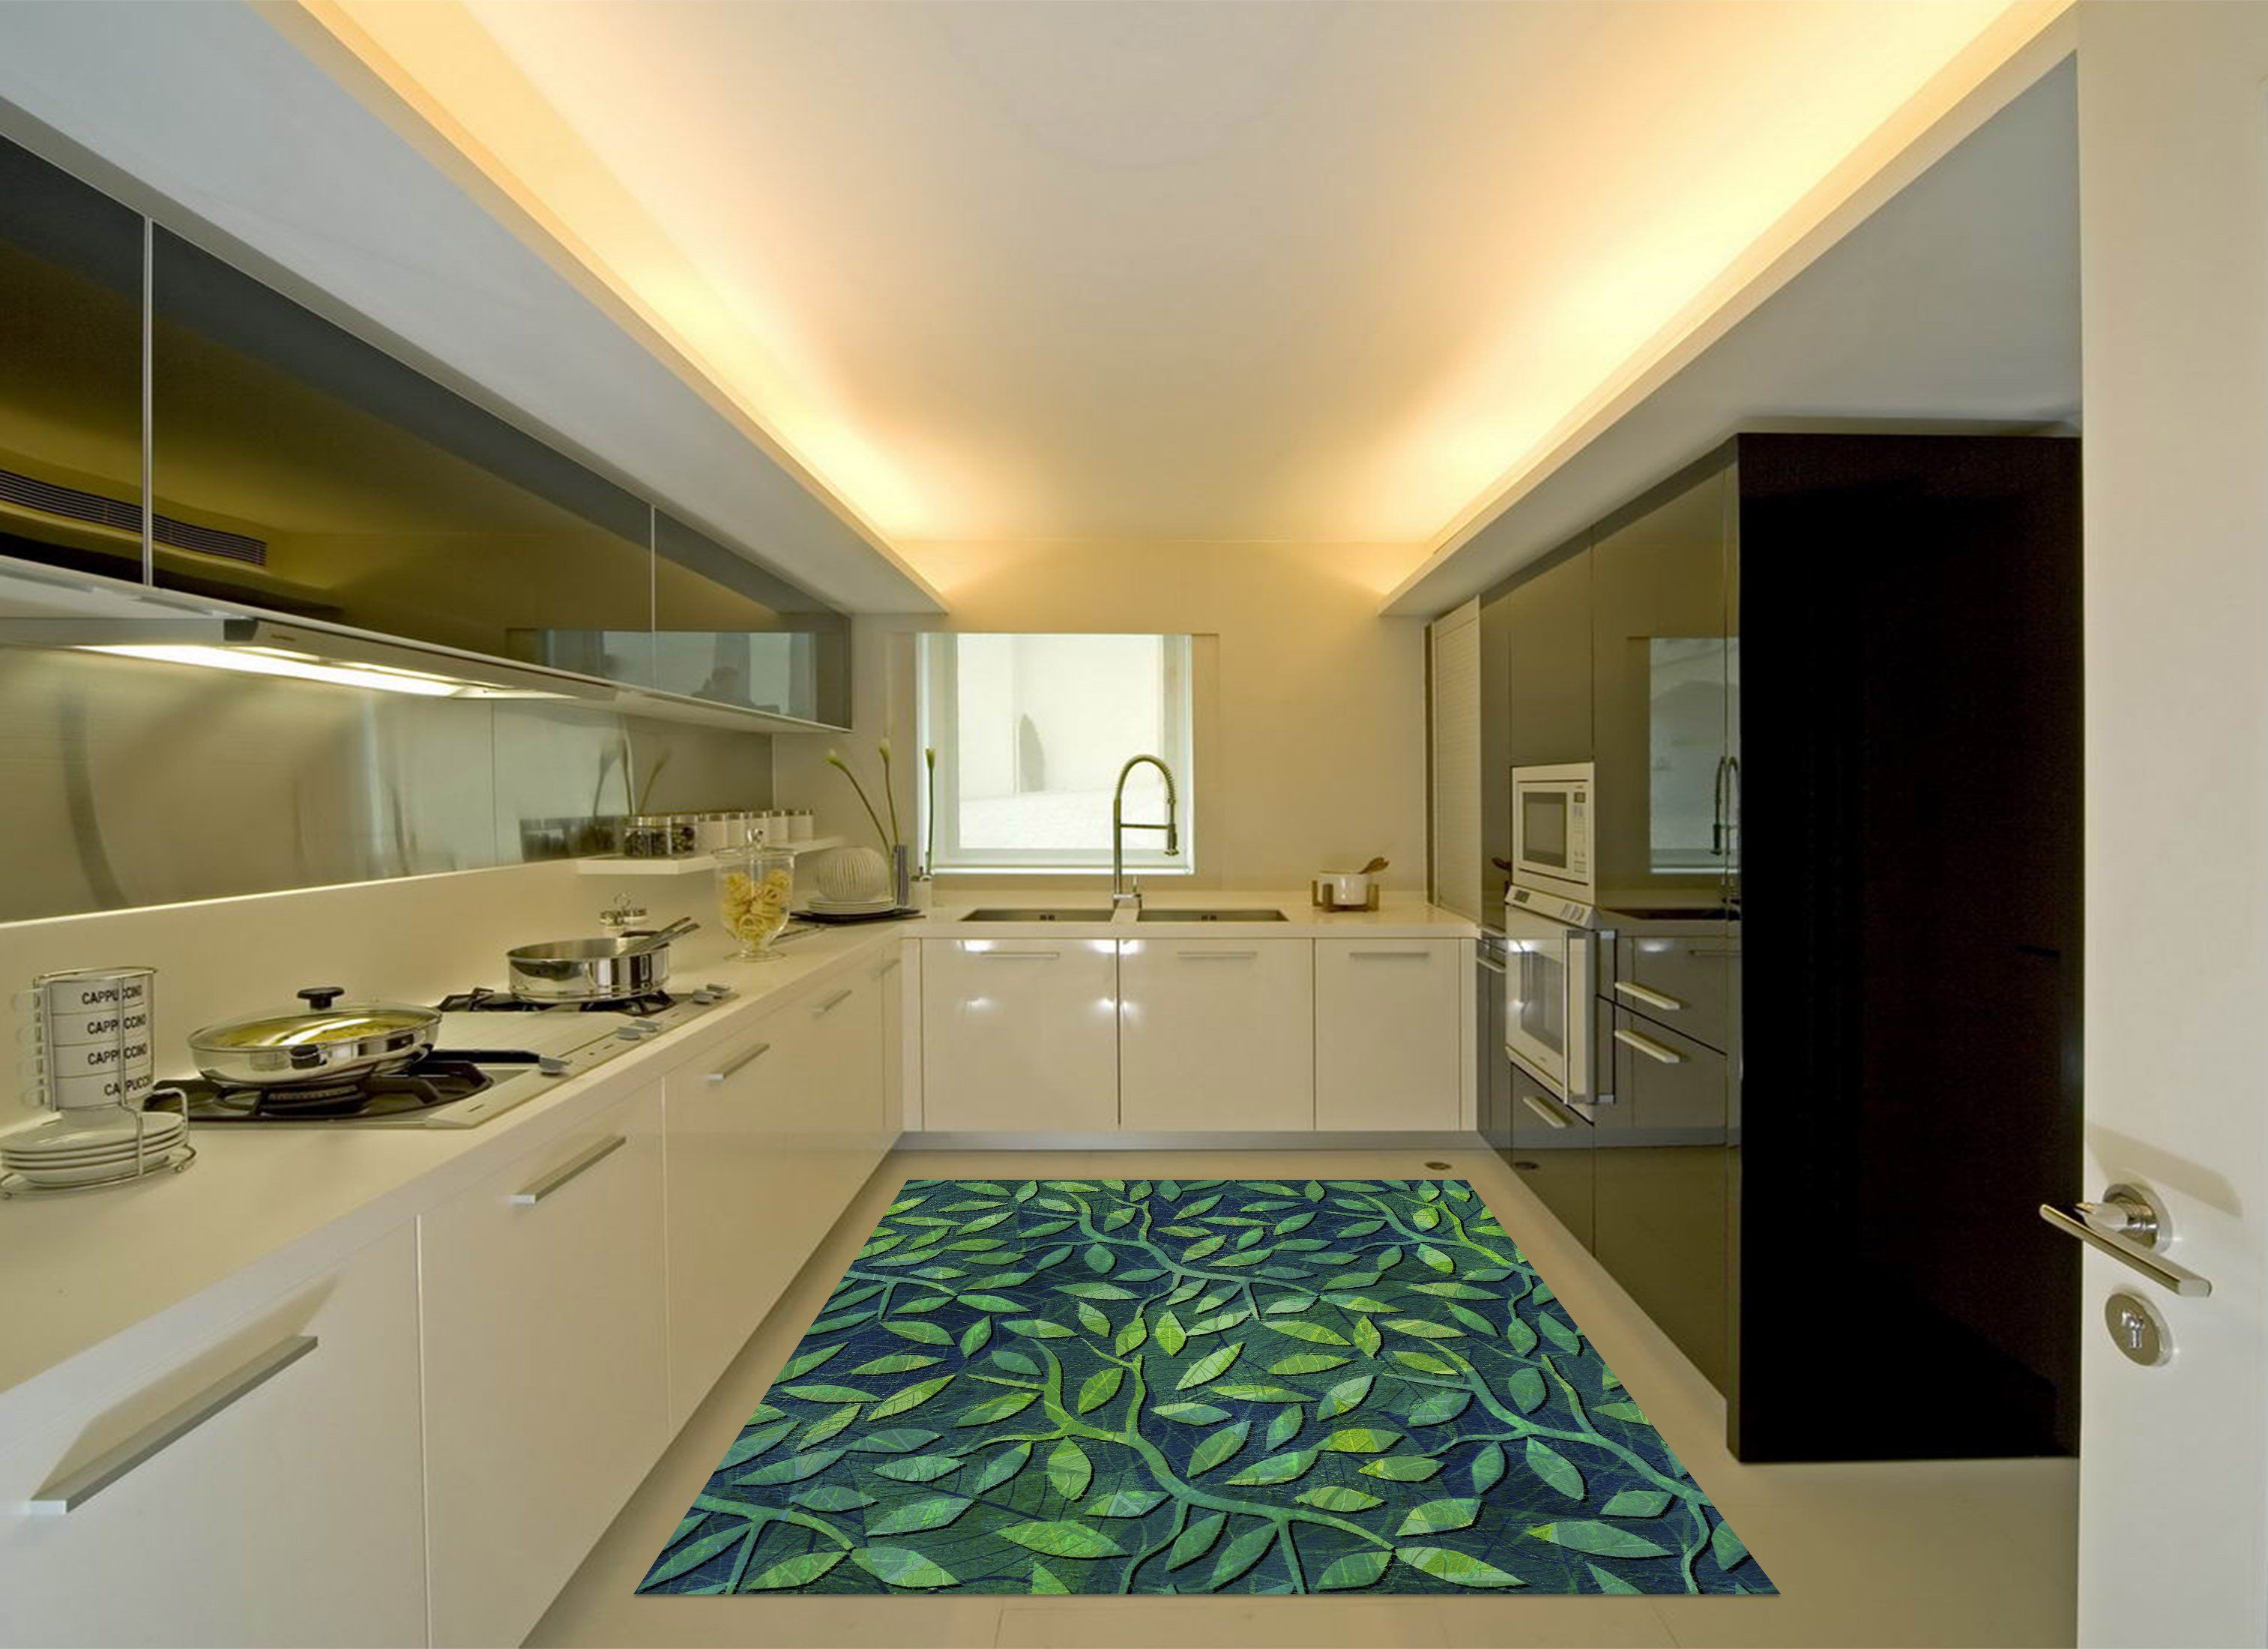 3D Leaves Pattern Kitchen Mat Floor Mural Wallpaper AJ Wallpaper 